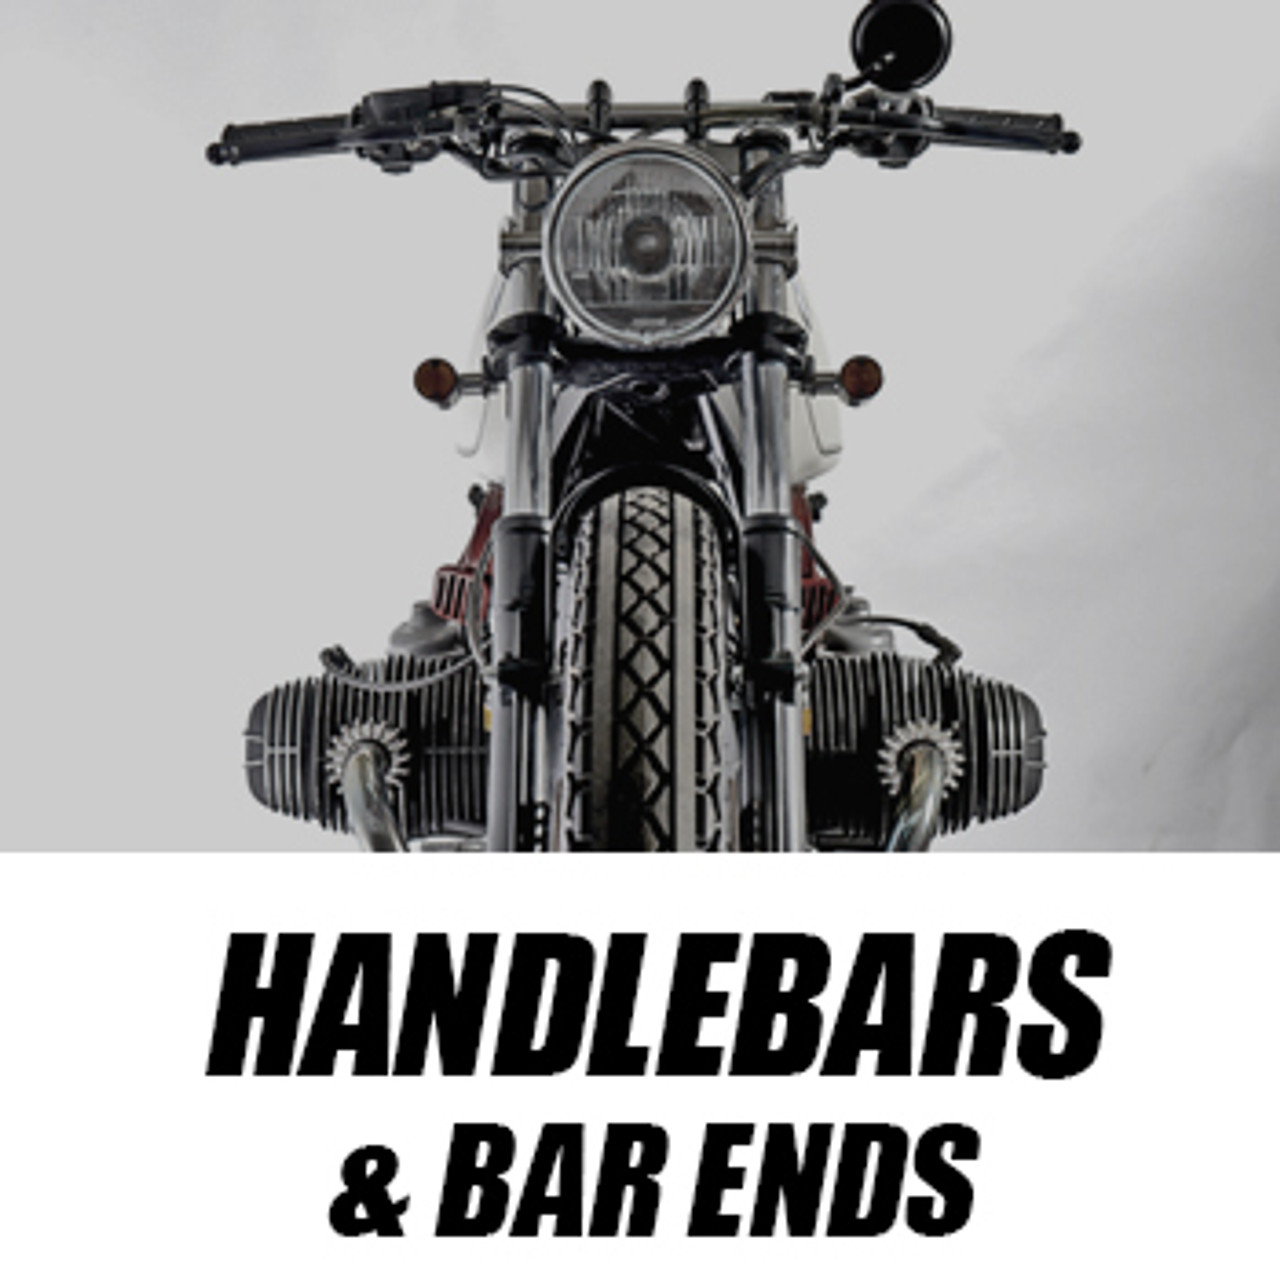 Handlebars & Bar ends